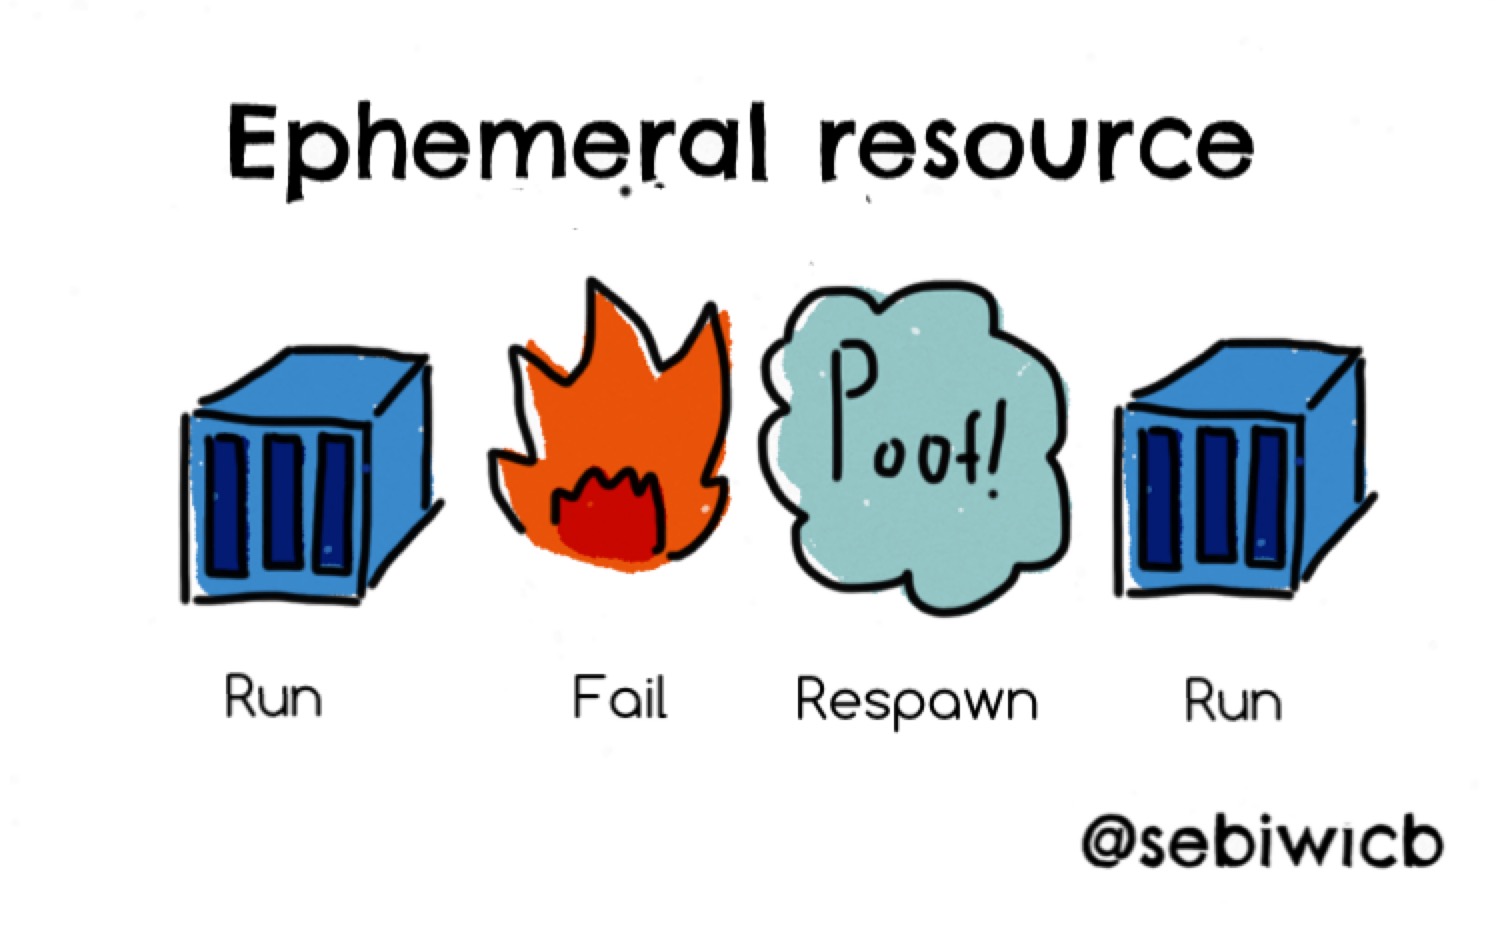 Ephemeral resource